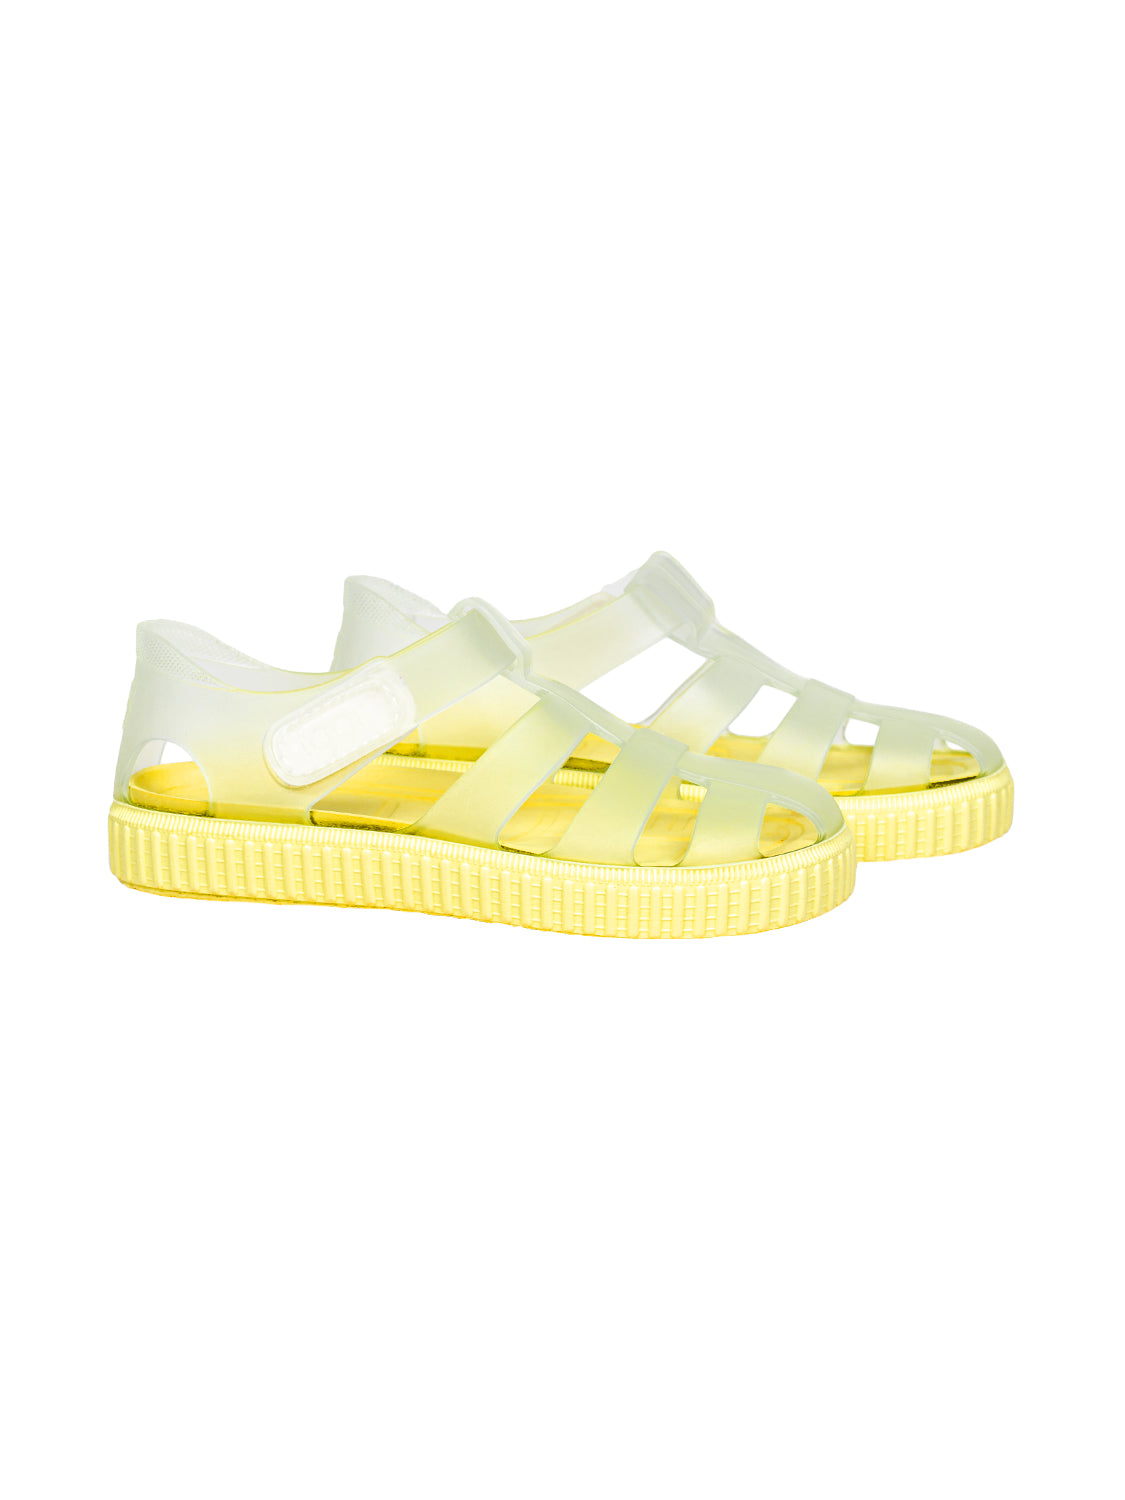 Sandale Nico Cristal - Gelb